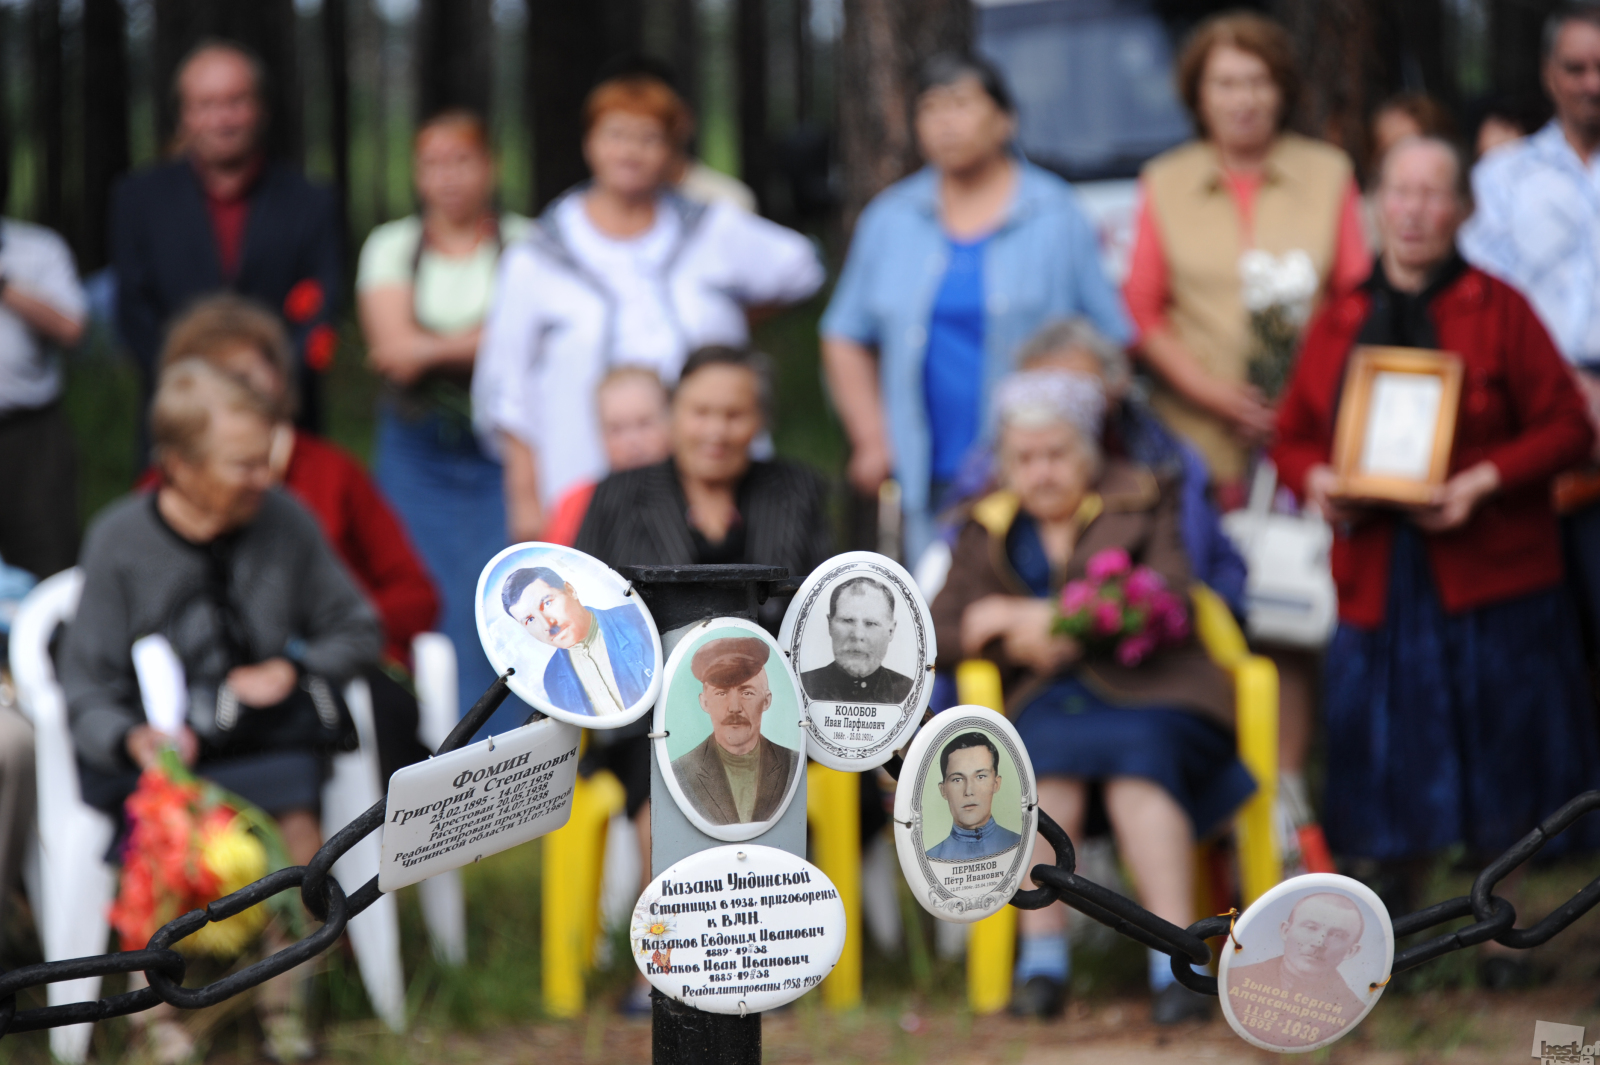 Russians participate in memorial action commemorating victims of repression